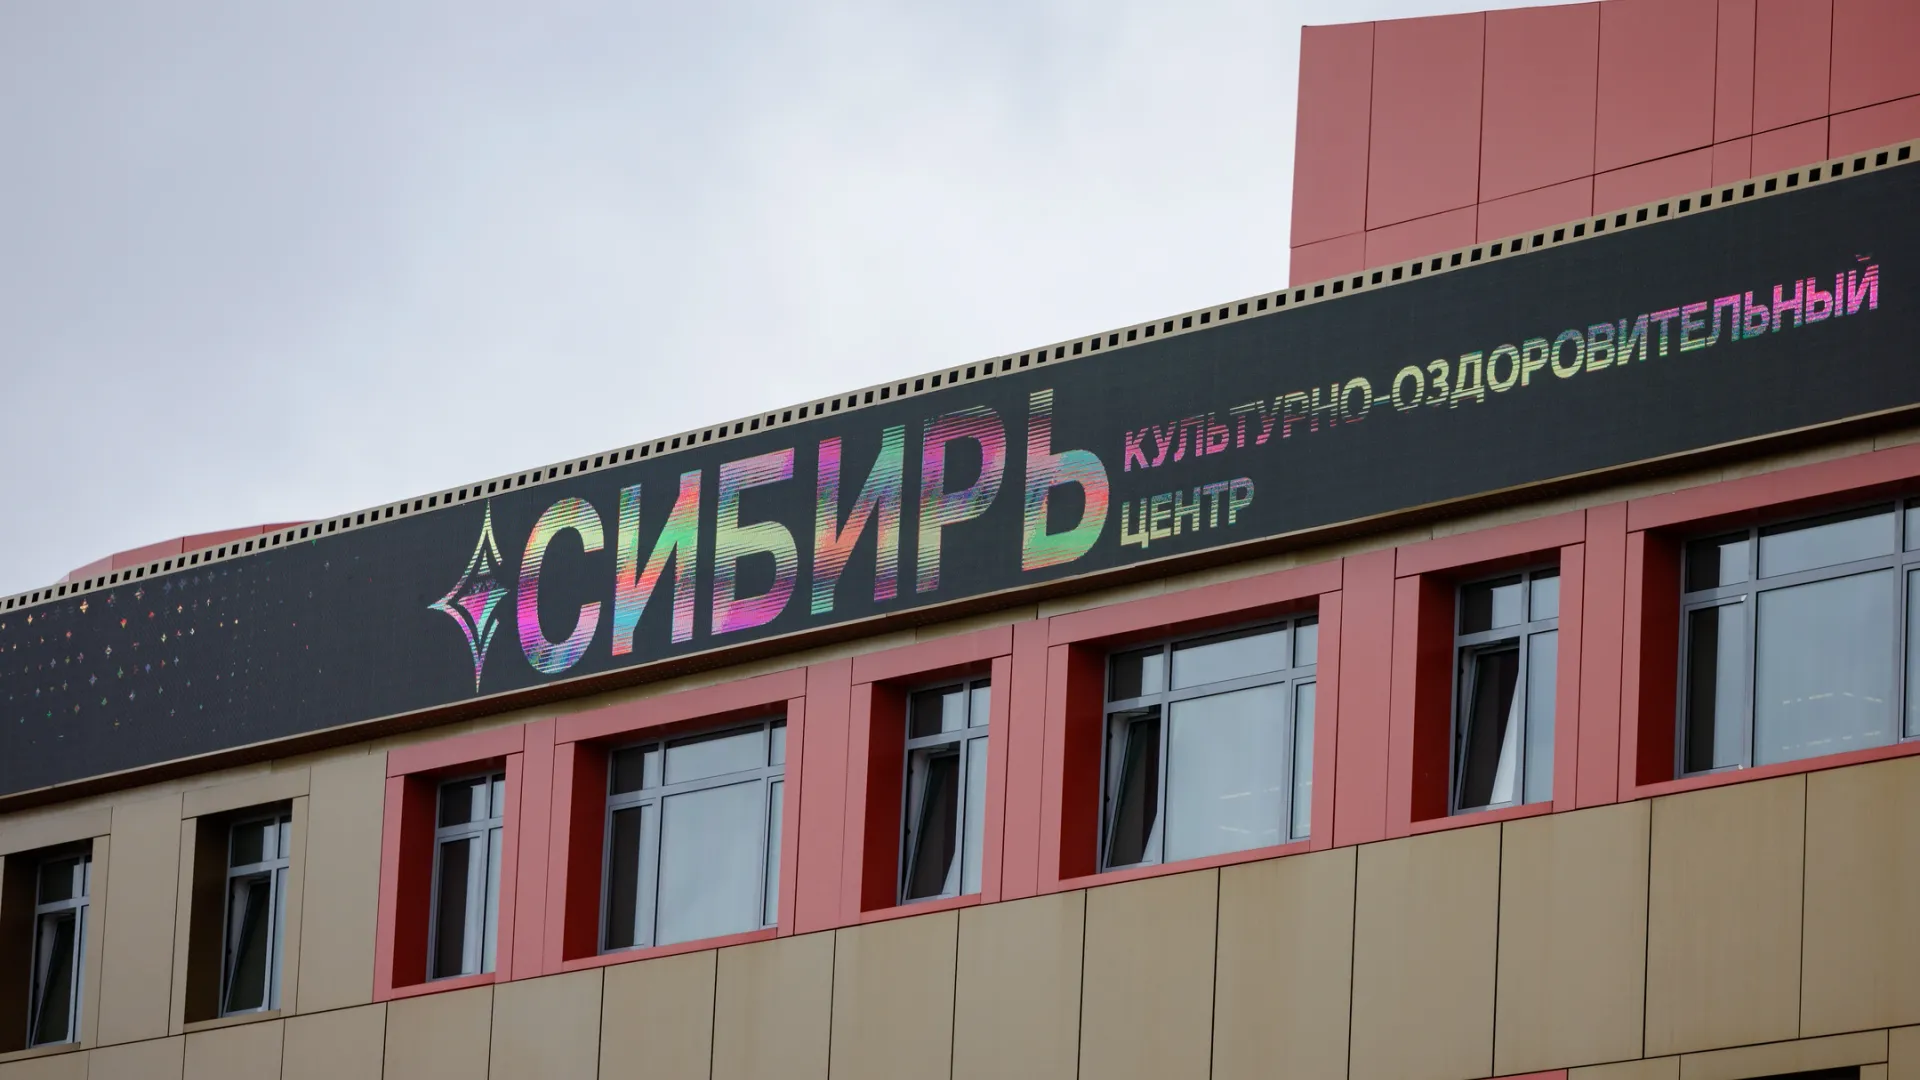 Встреча со звездами пройдет в комплексе «Сибирь». Фото: Юлия Чудинова / «Ямал-Медиа»